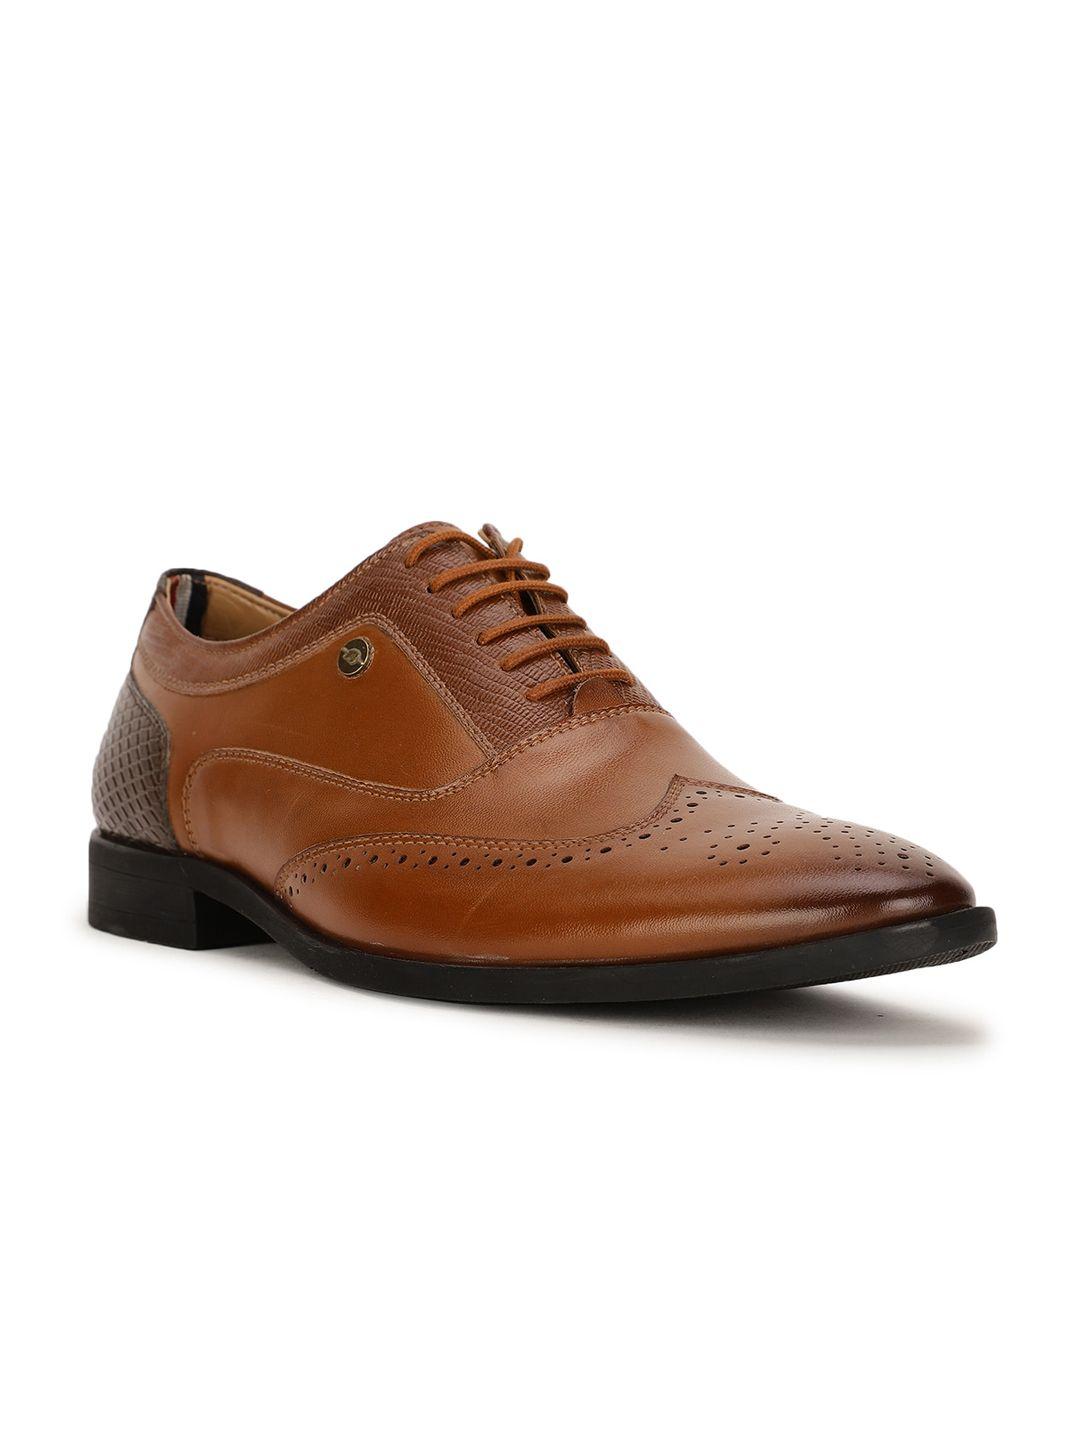 bata men tan colored formal oxford shoes